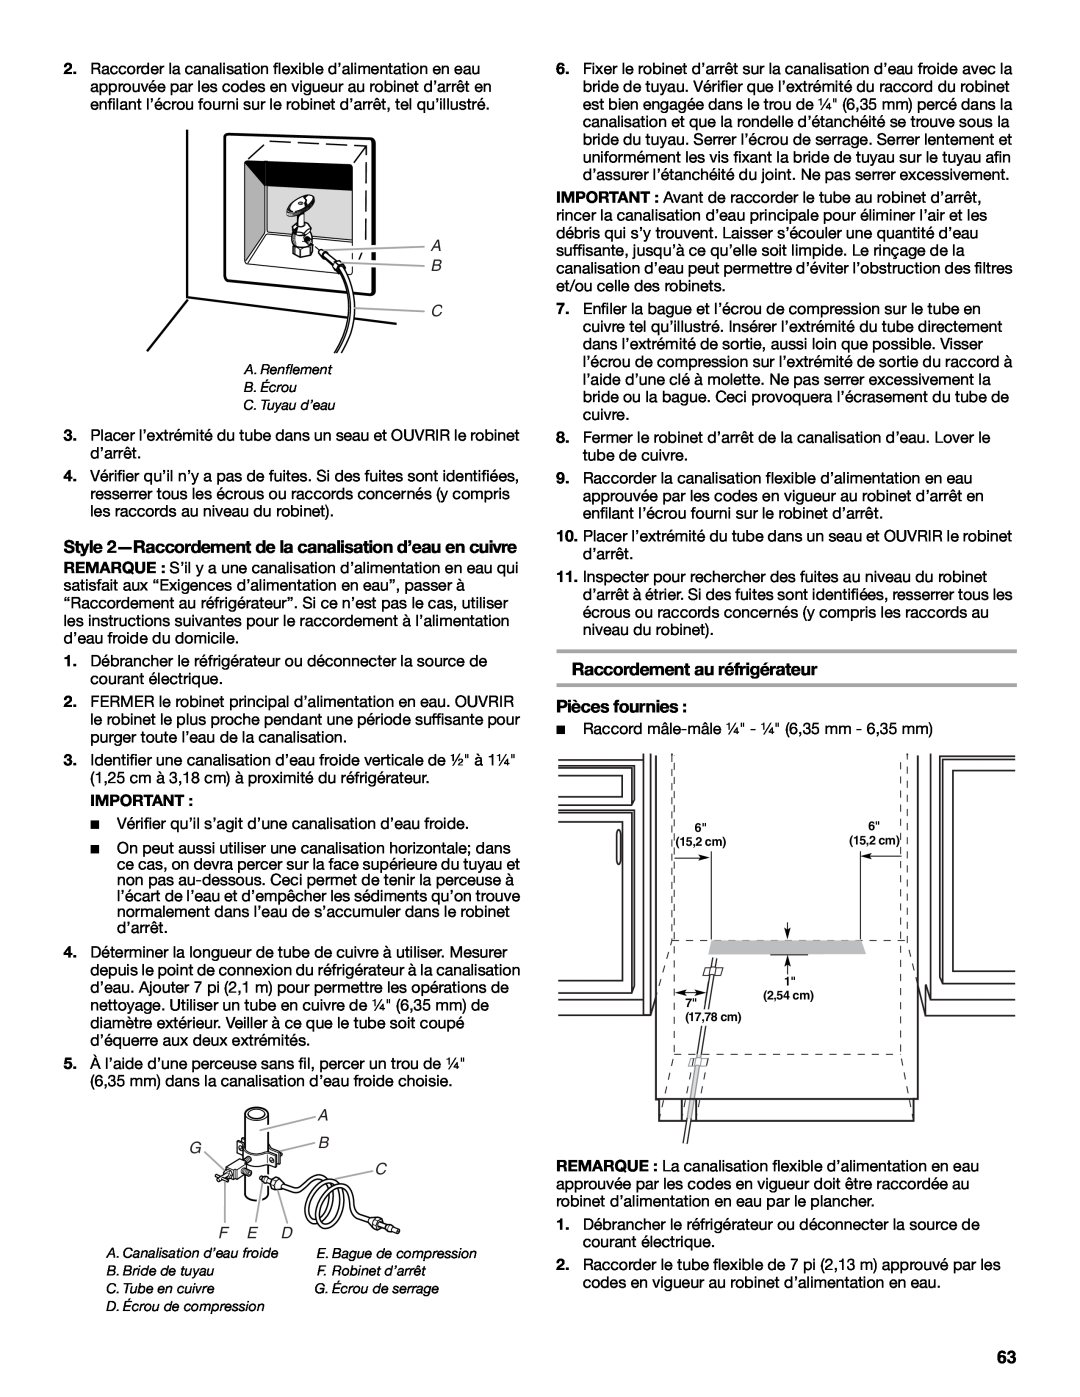 Jenn-Air W10379136B manual Raccordement au réfrigérateur, Pièces fournies, A B C 